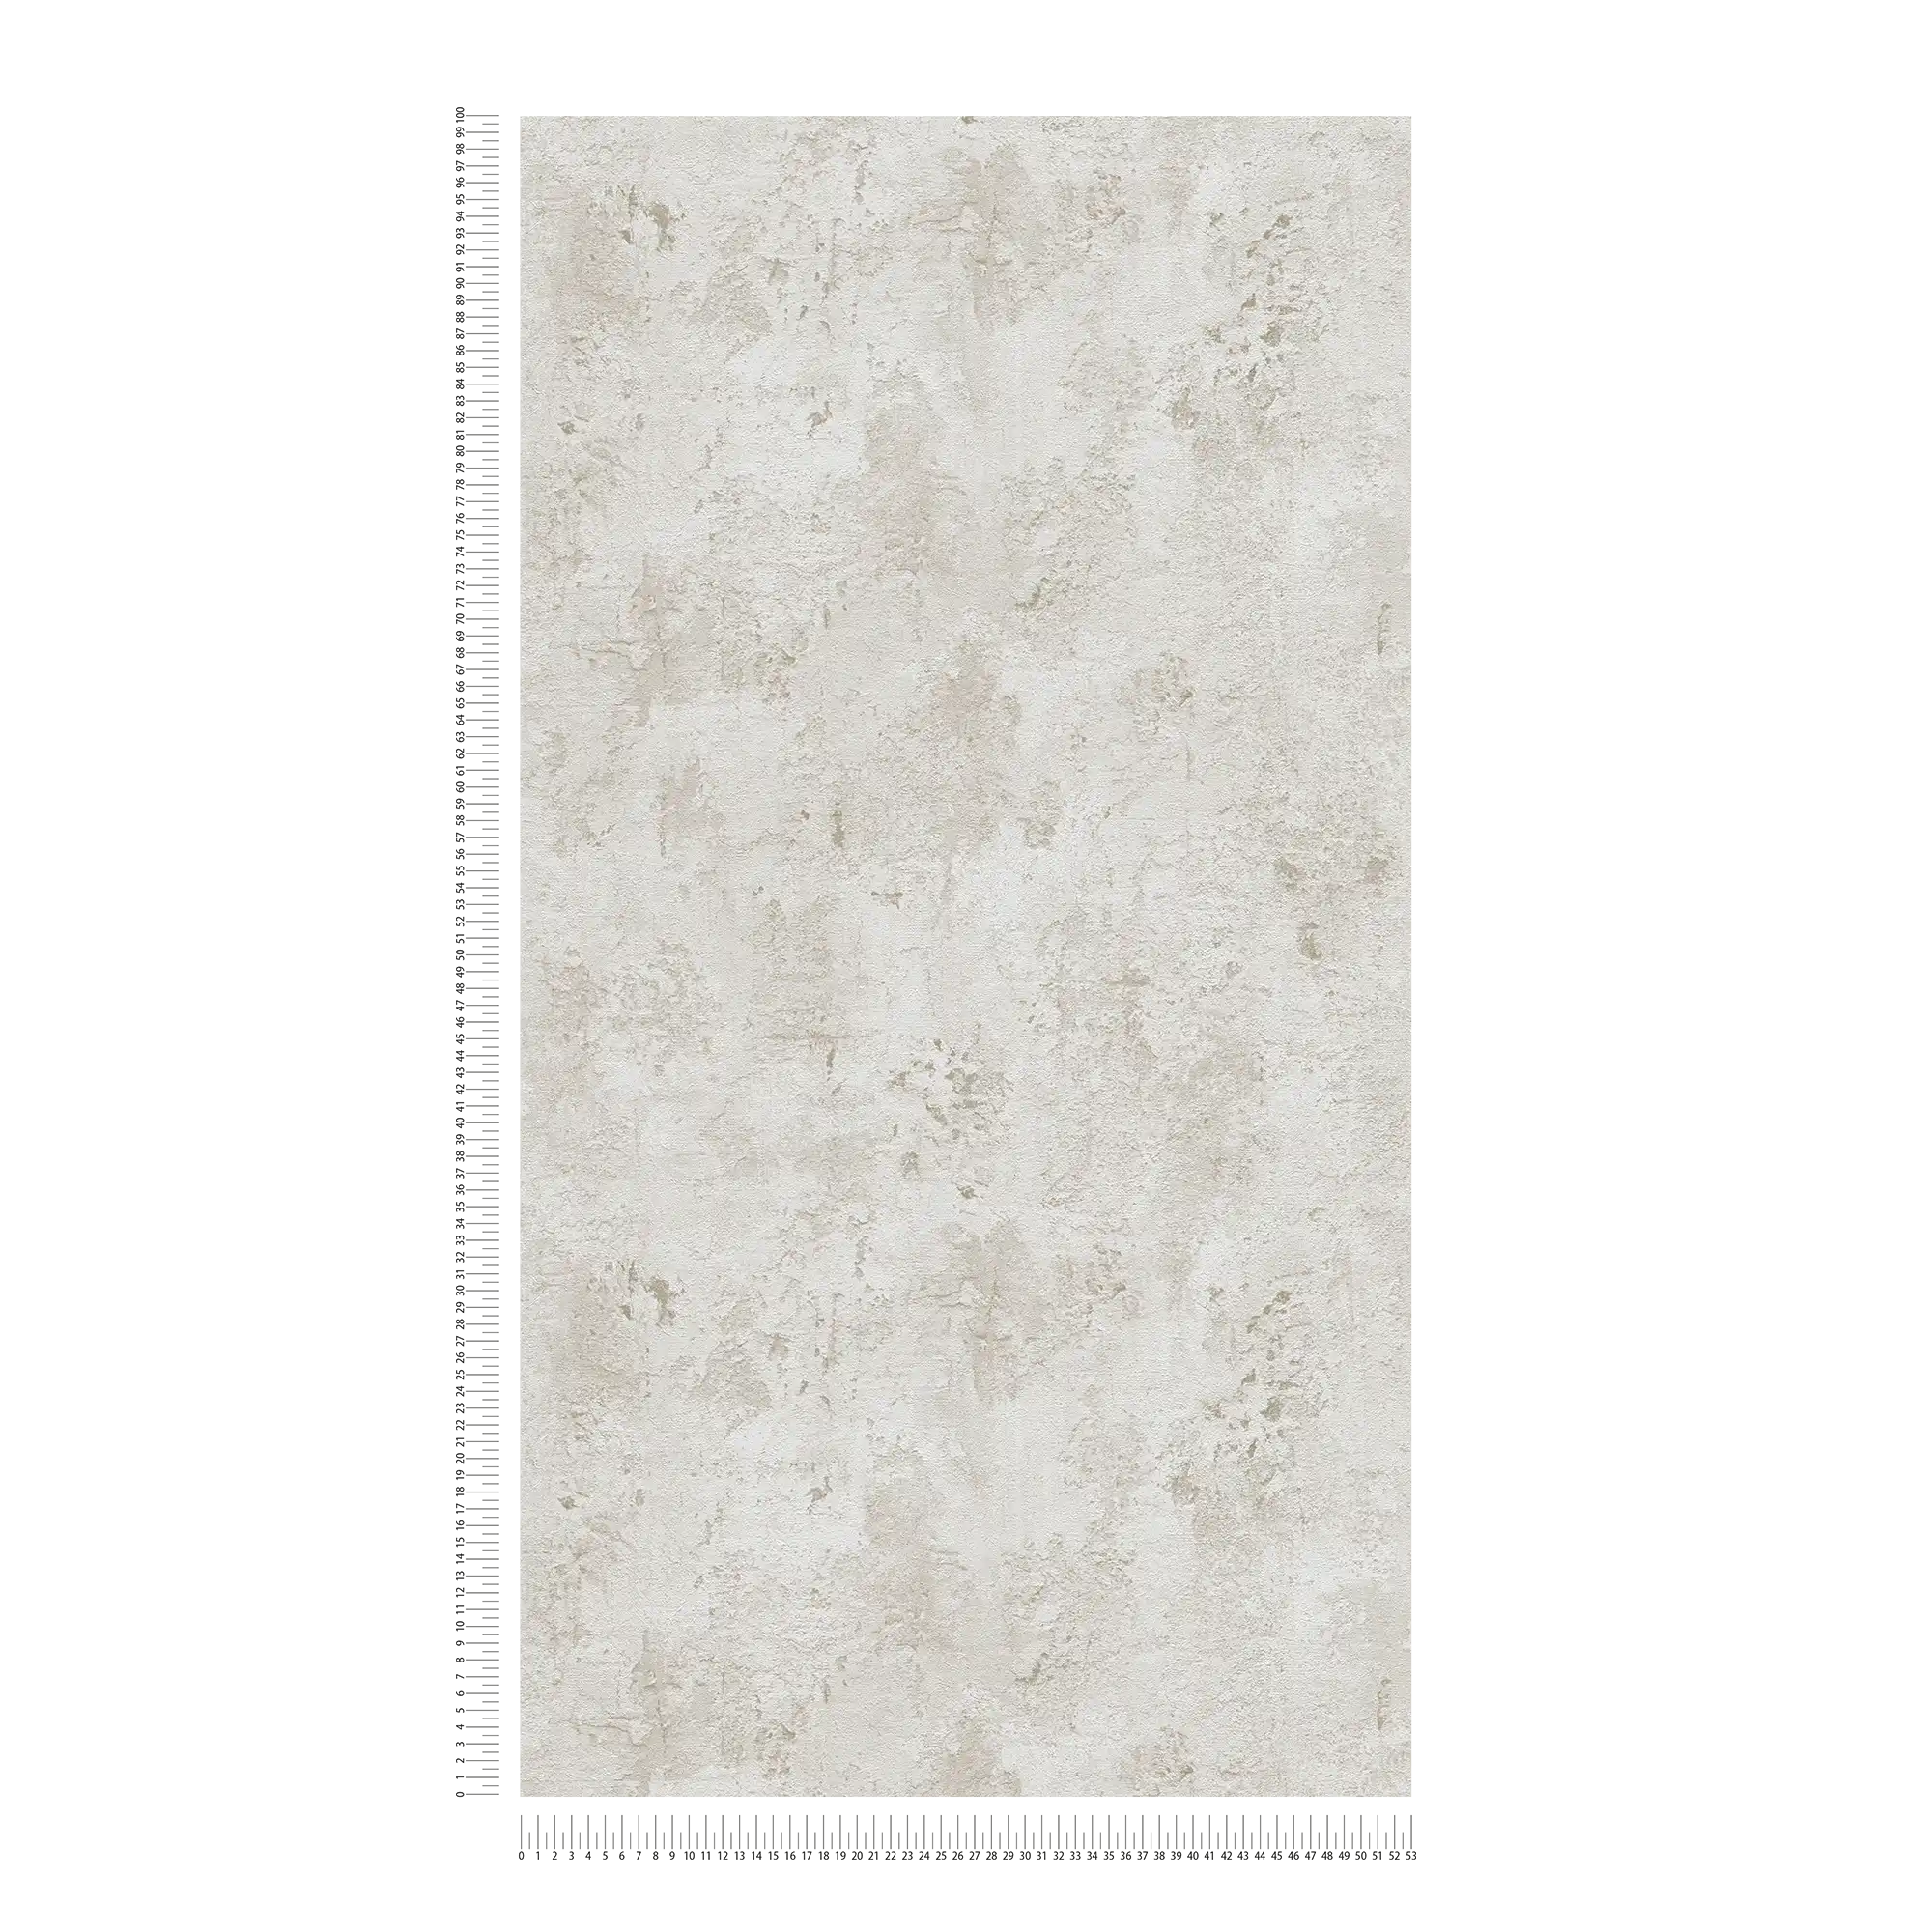             Plaster optics wallpaper with structural pattern - grey, beige
        